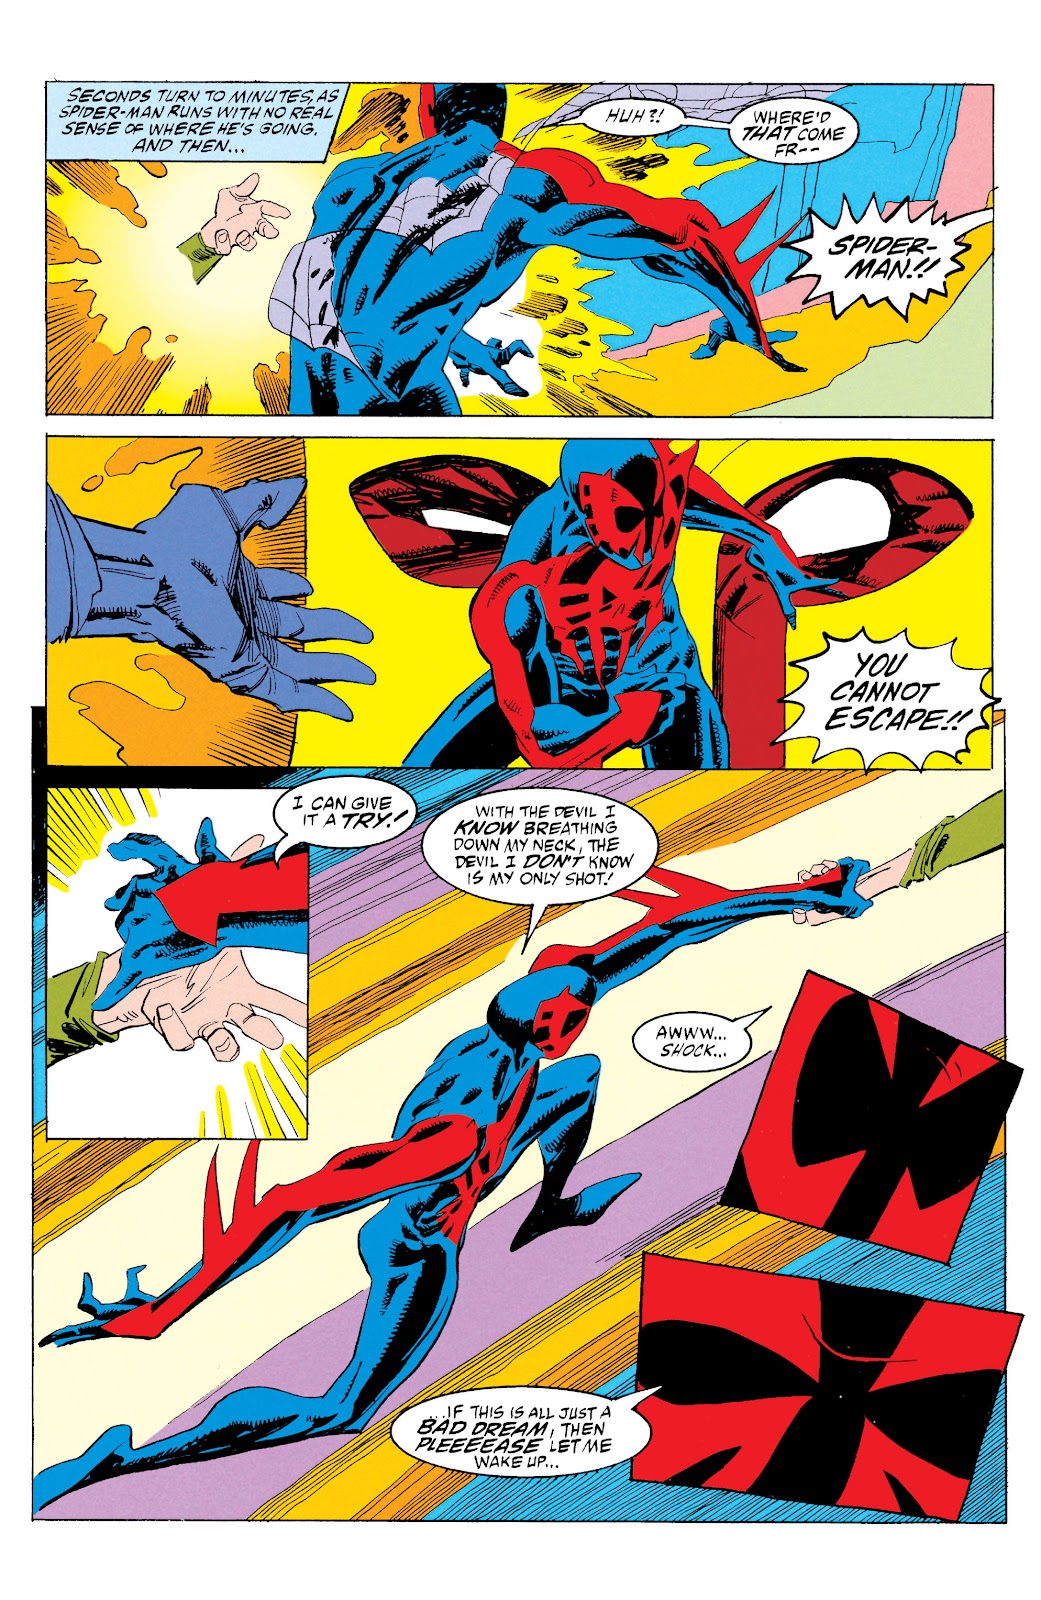 Spider-Man 2099 (1992) issue 13 - Page 20